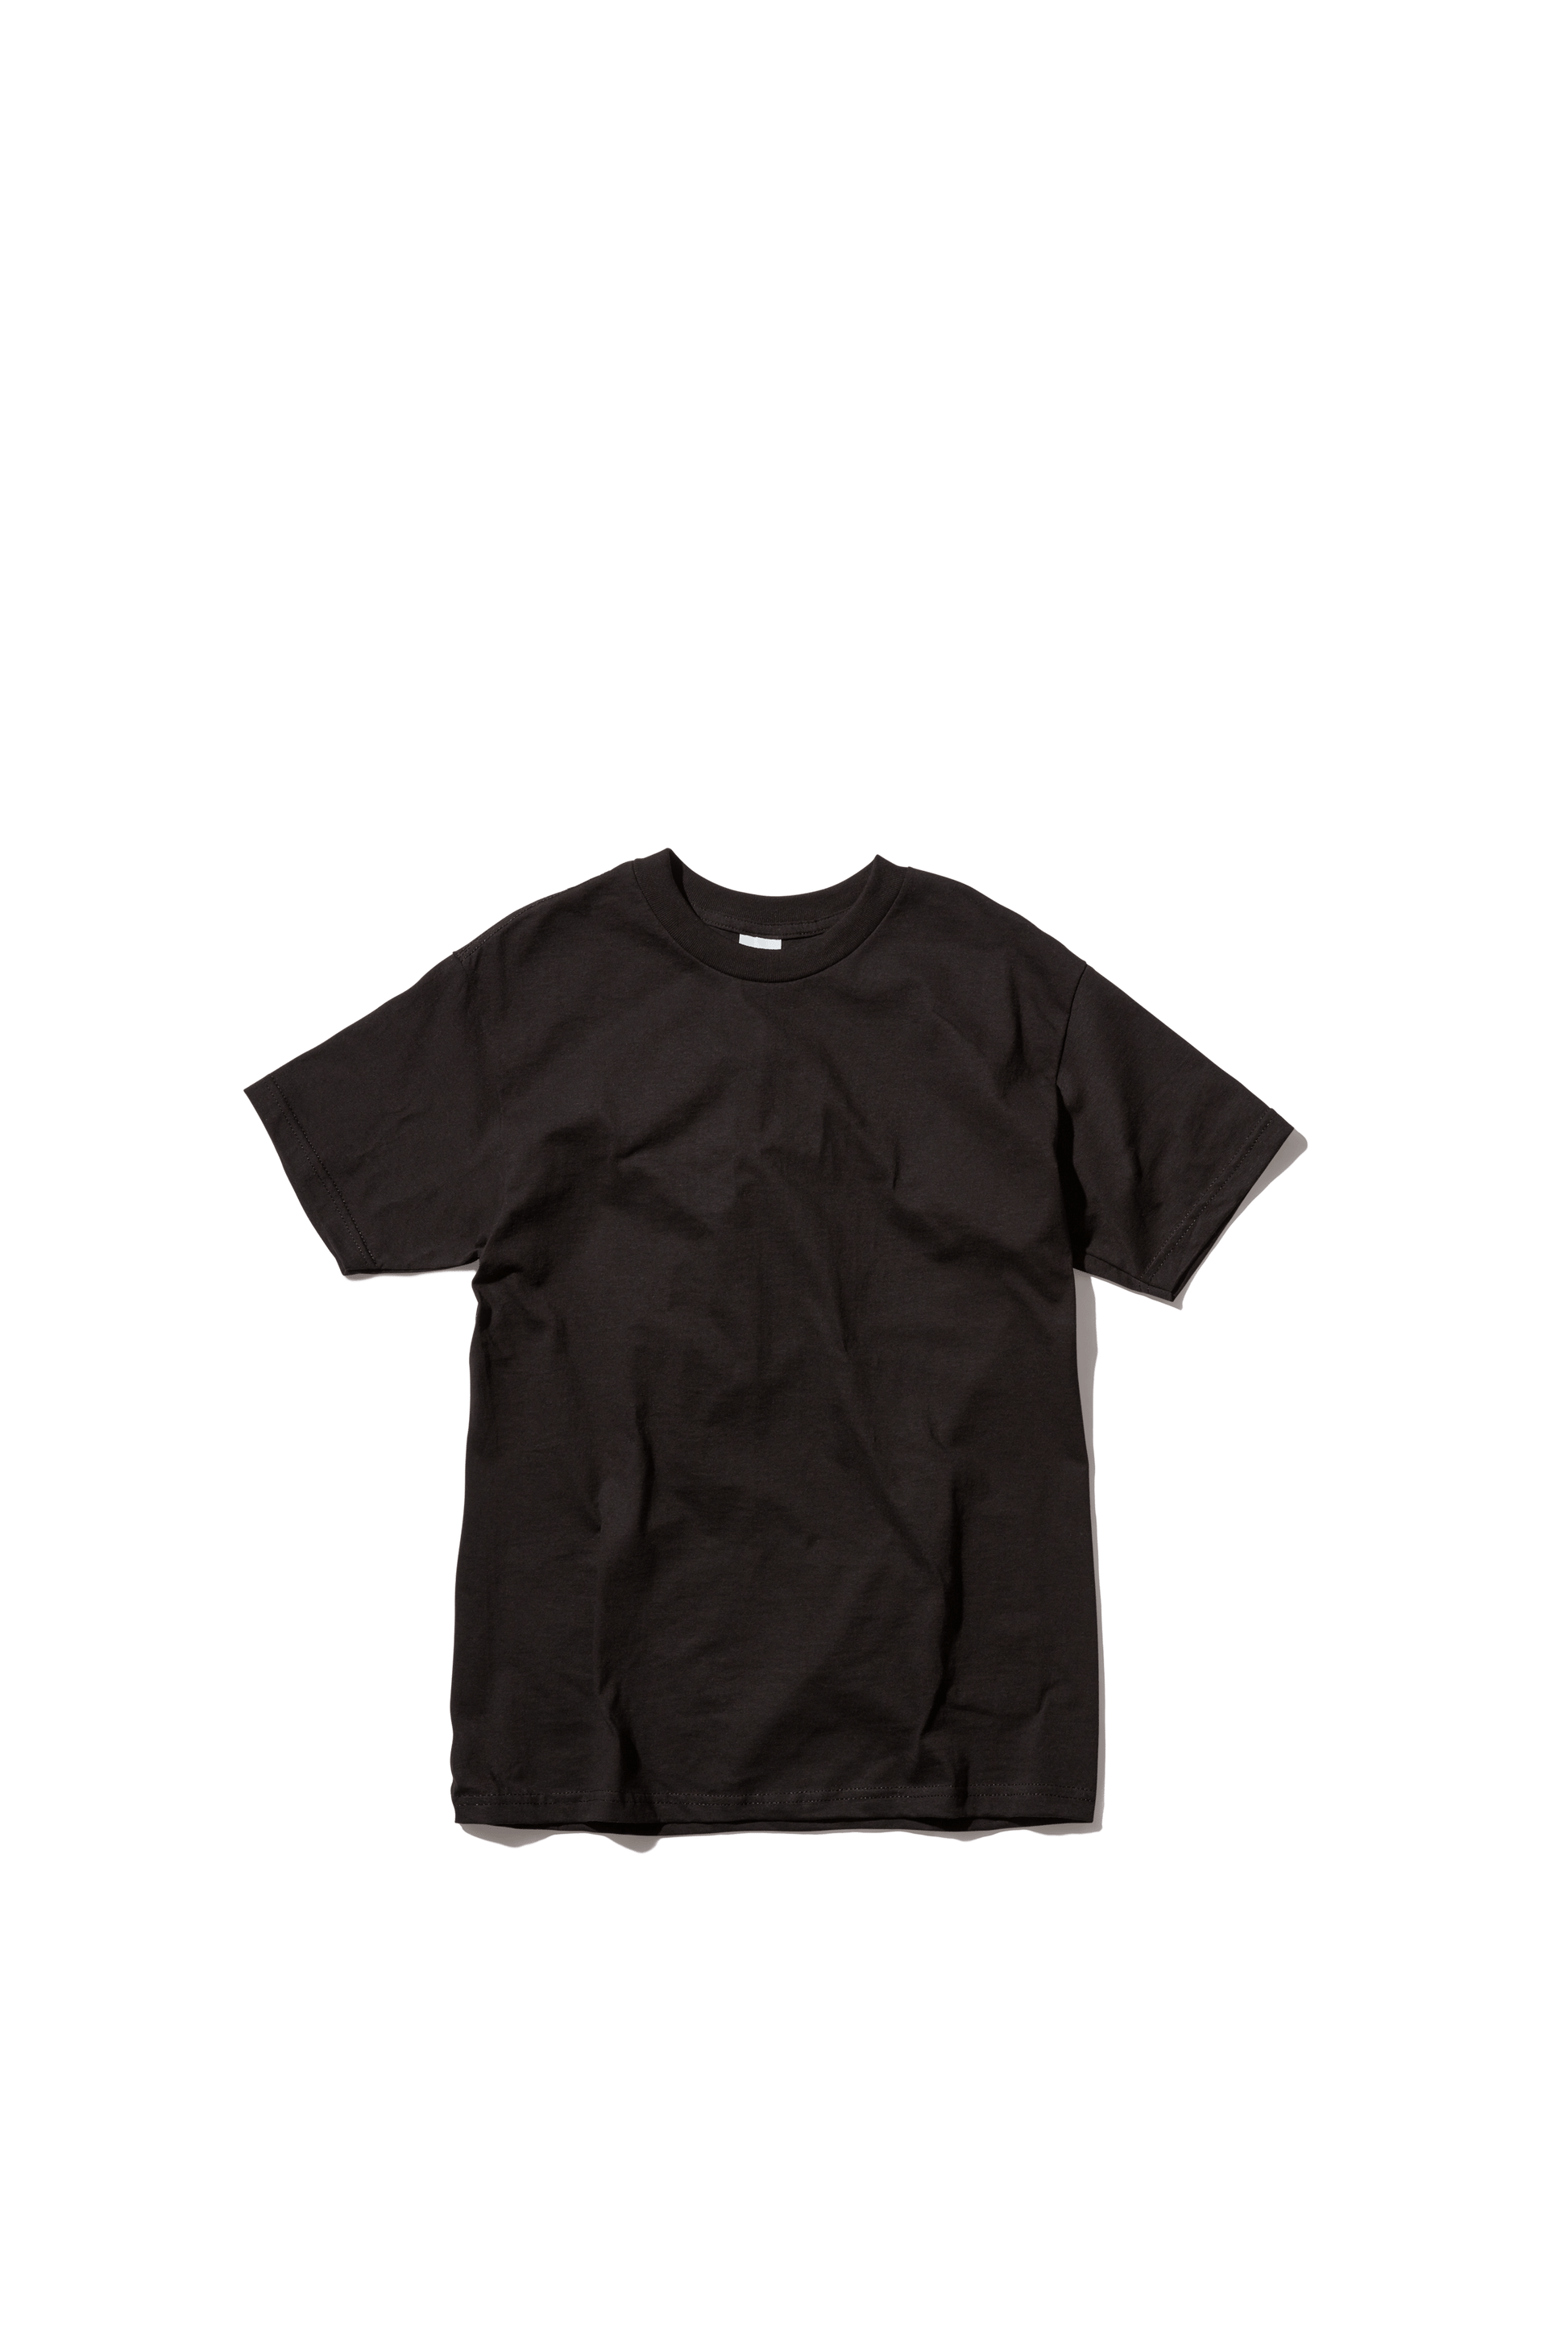 black t shirt front